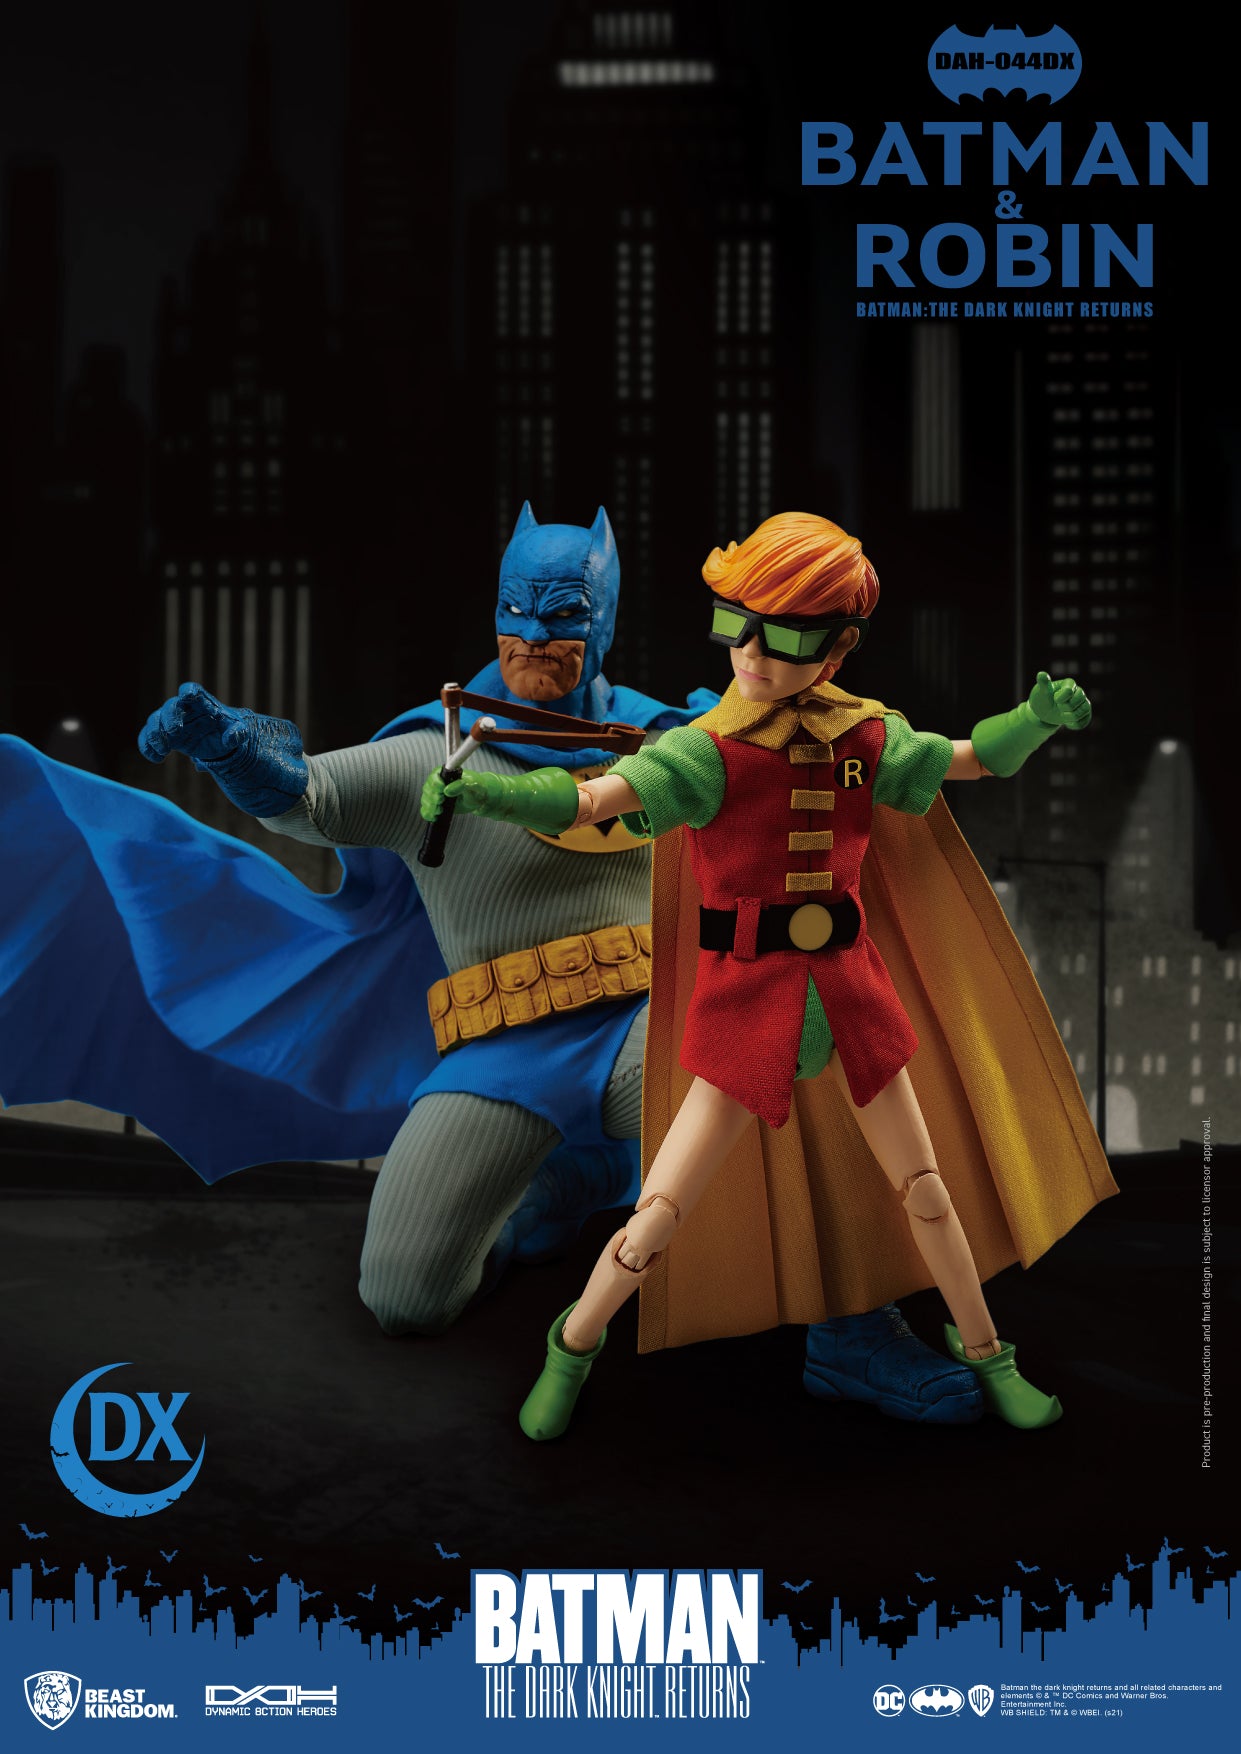 Batman - Robin (10 cm)